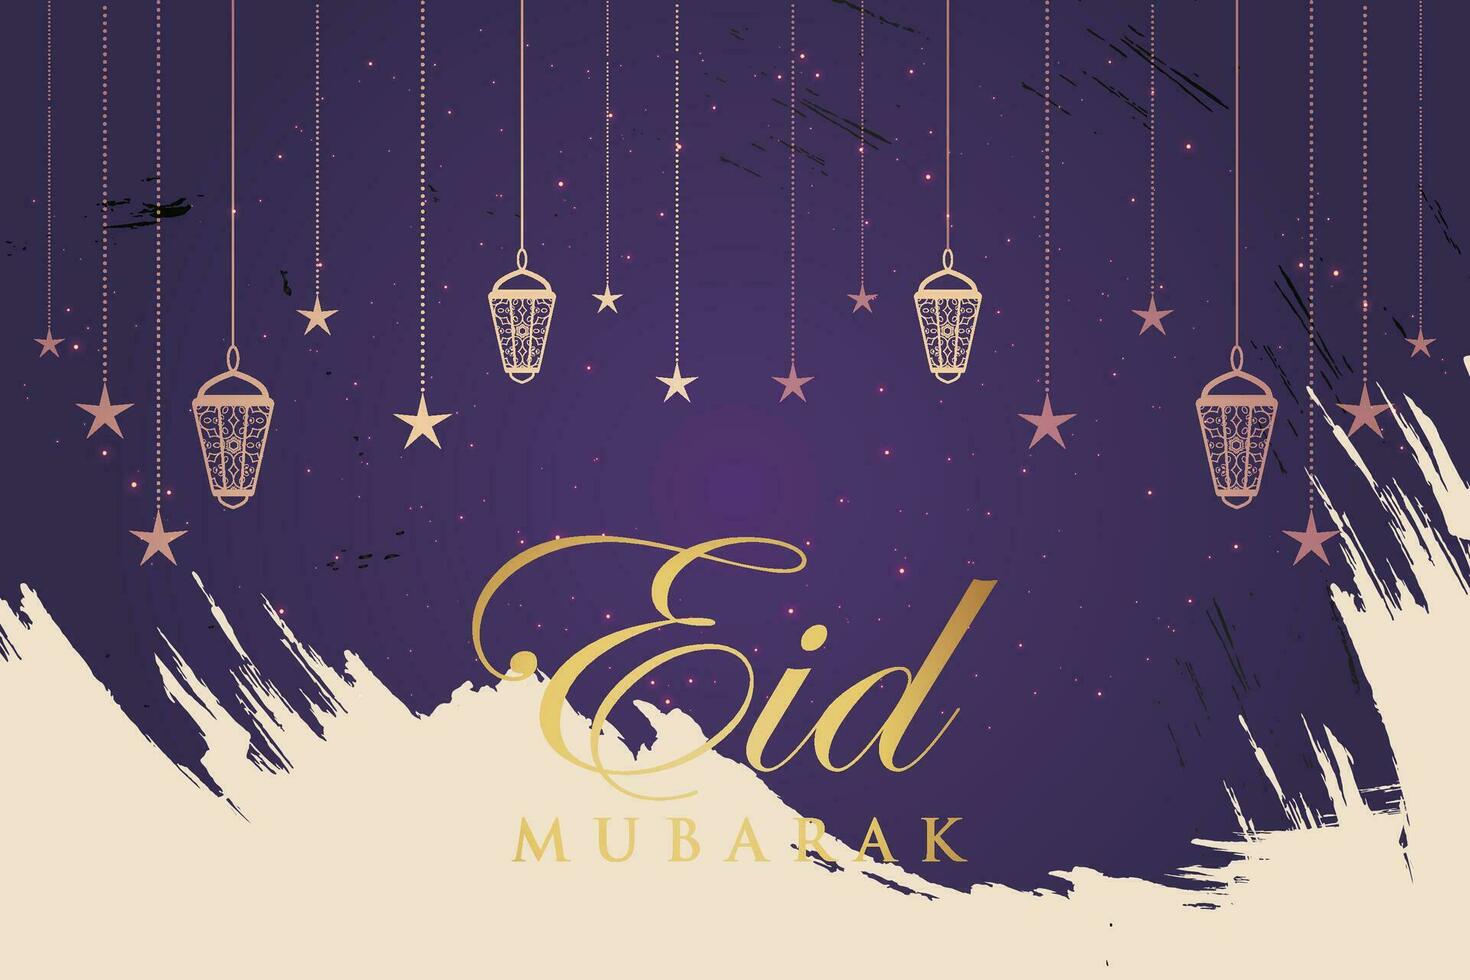 Ramadan eid al-fitr mubarak greeting card with lanterns and arabic call vector